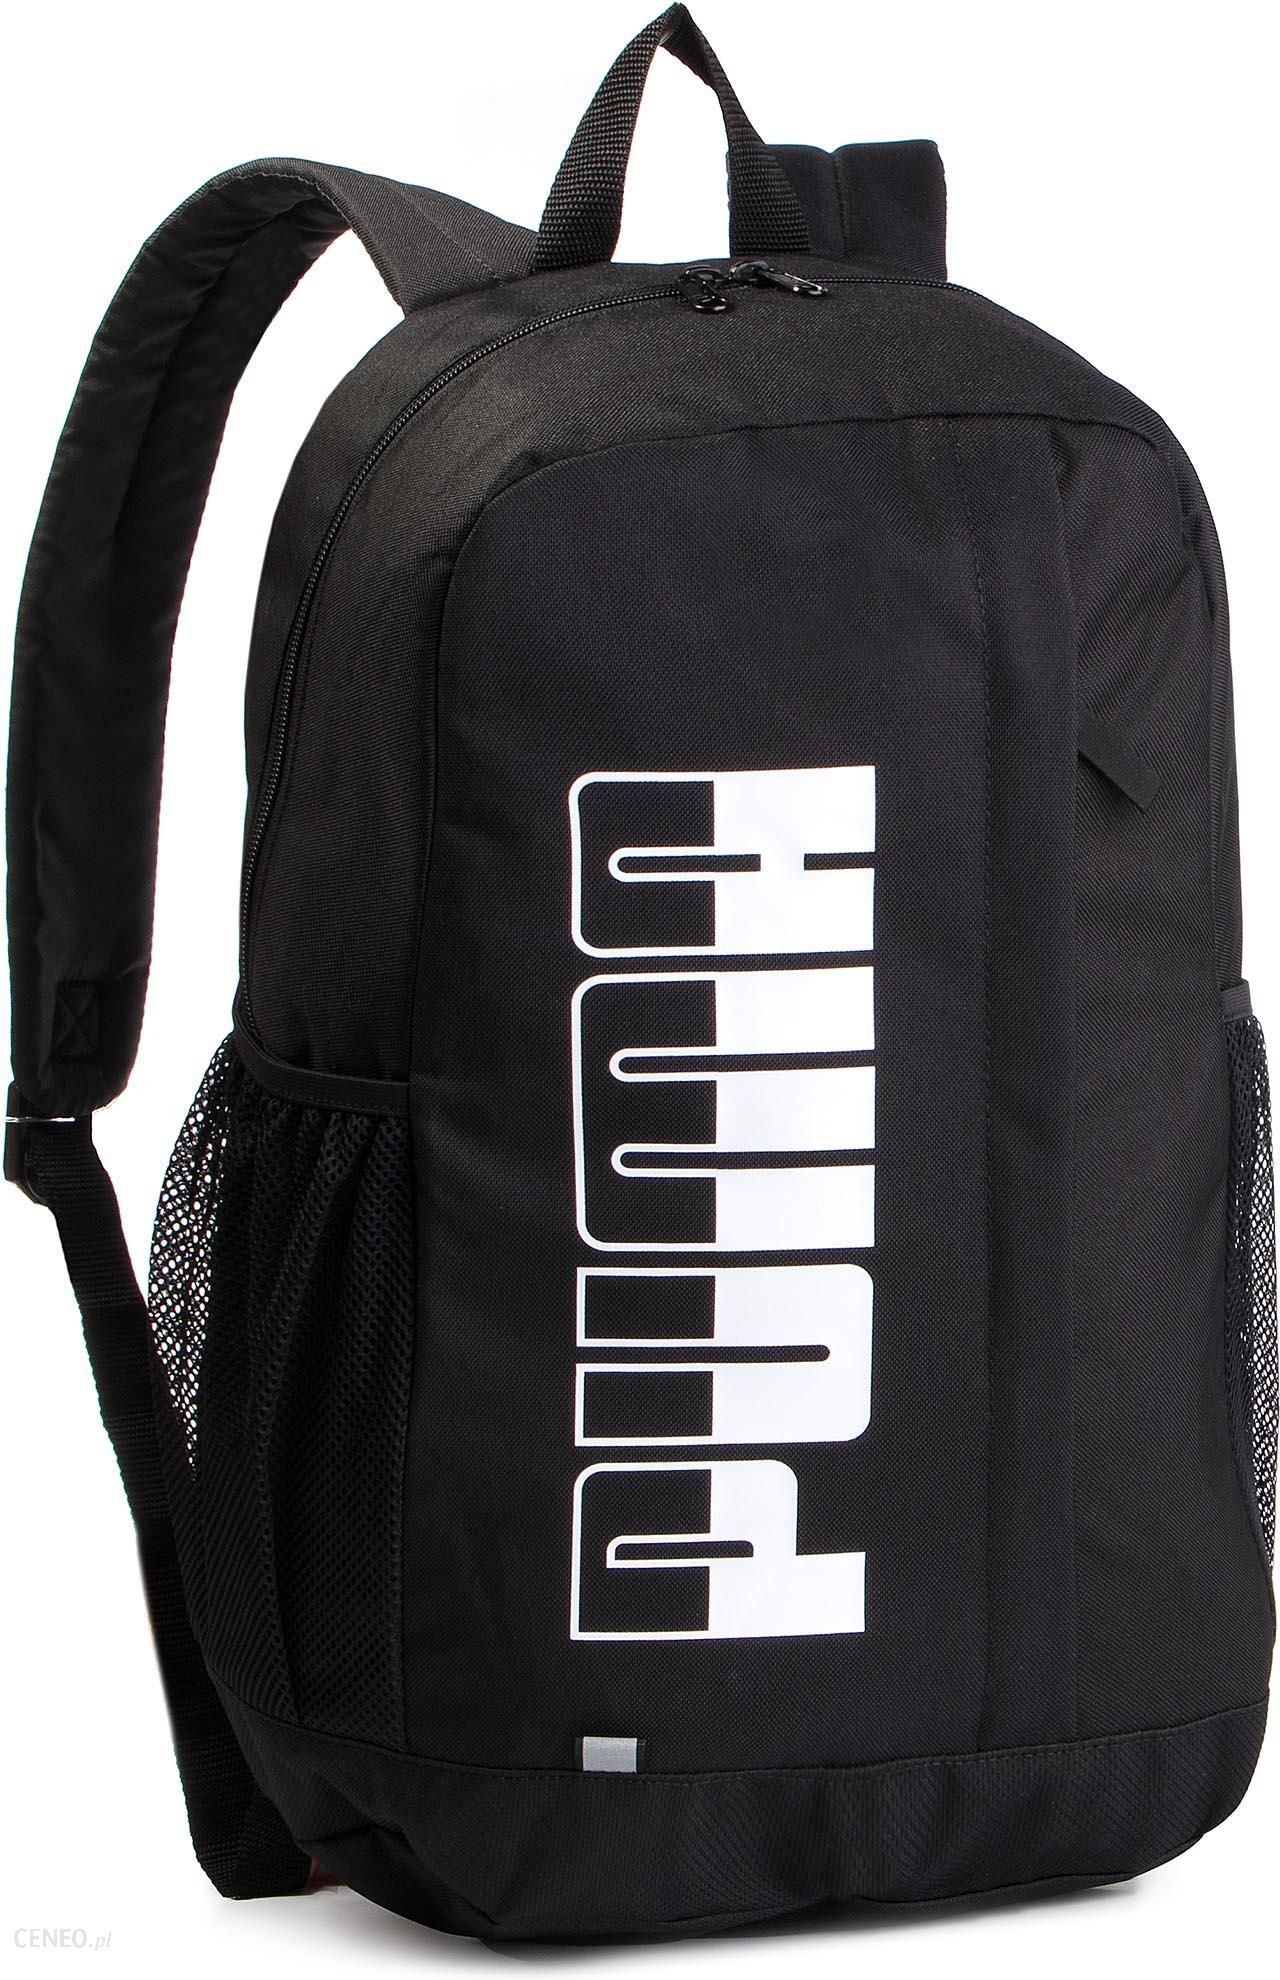 puma plus backpack 2